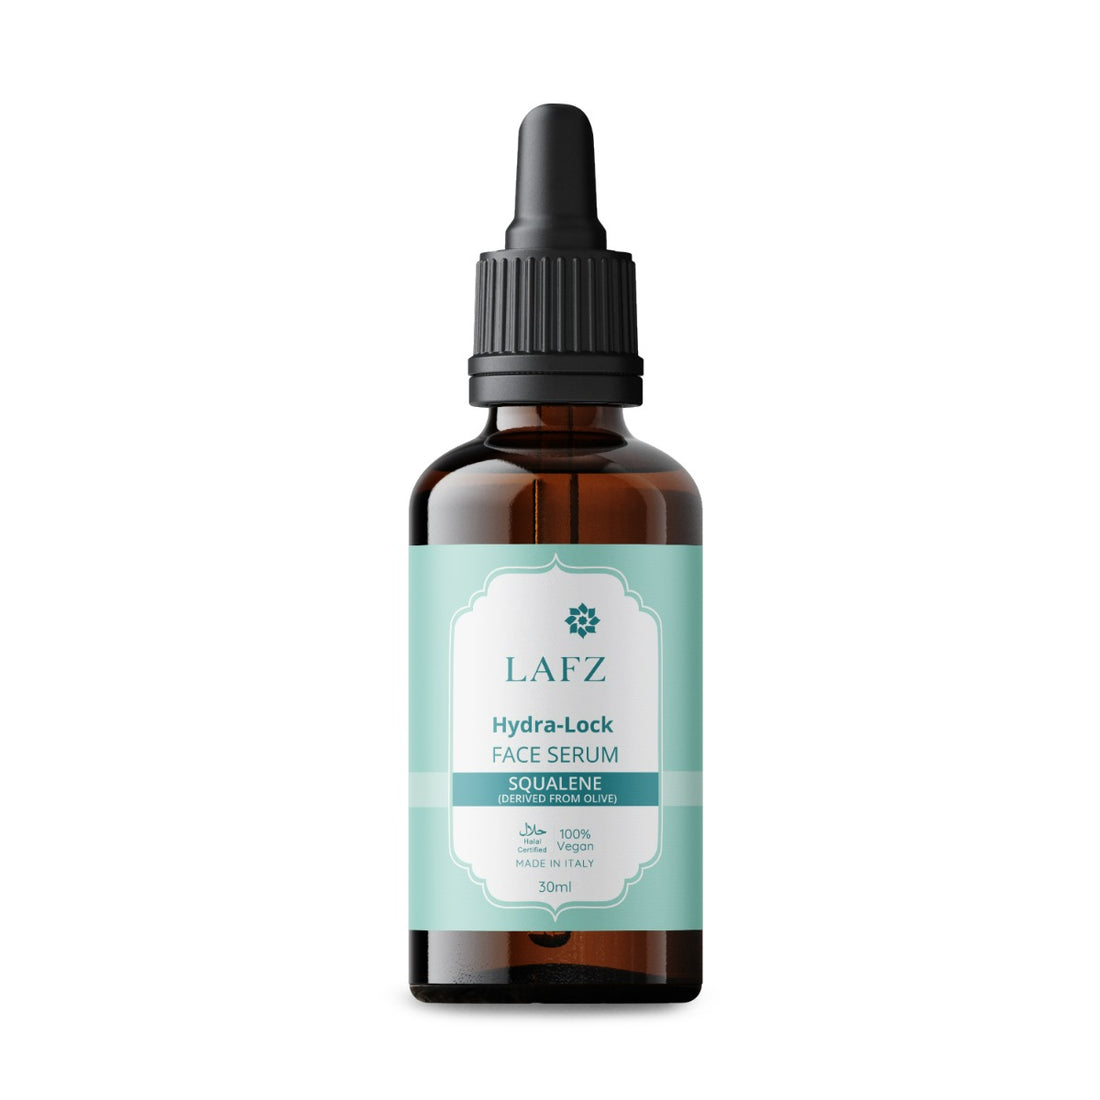 Lafz Hydra-Lock Face Serum (30ml) - Squalene